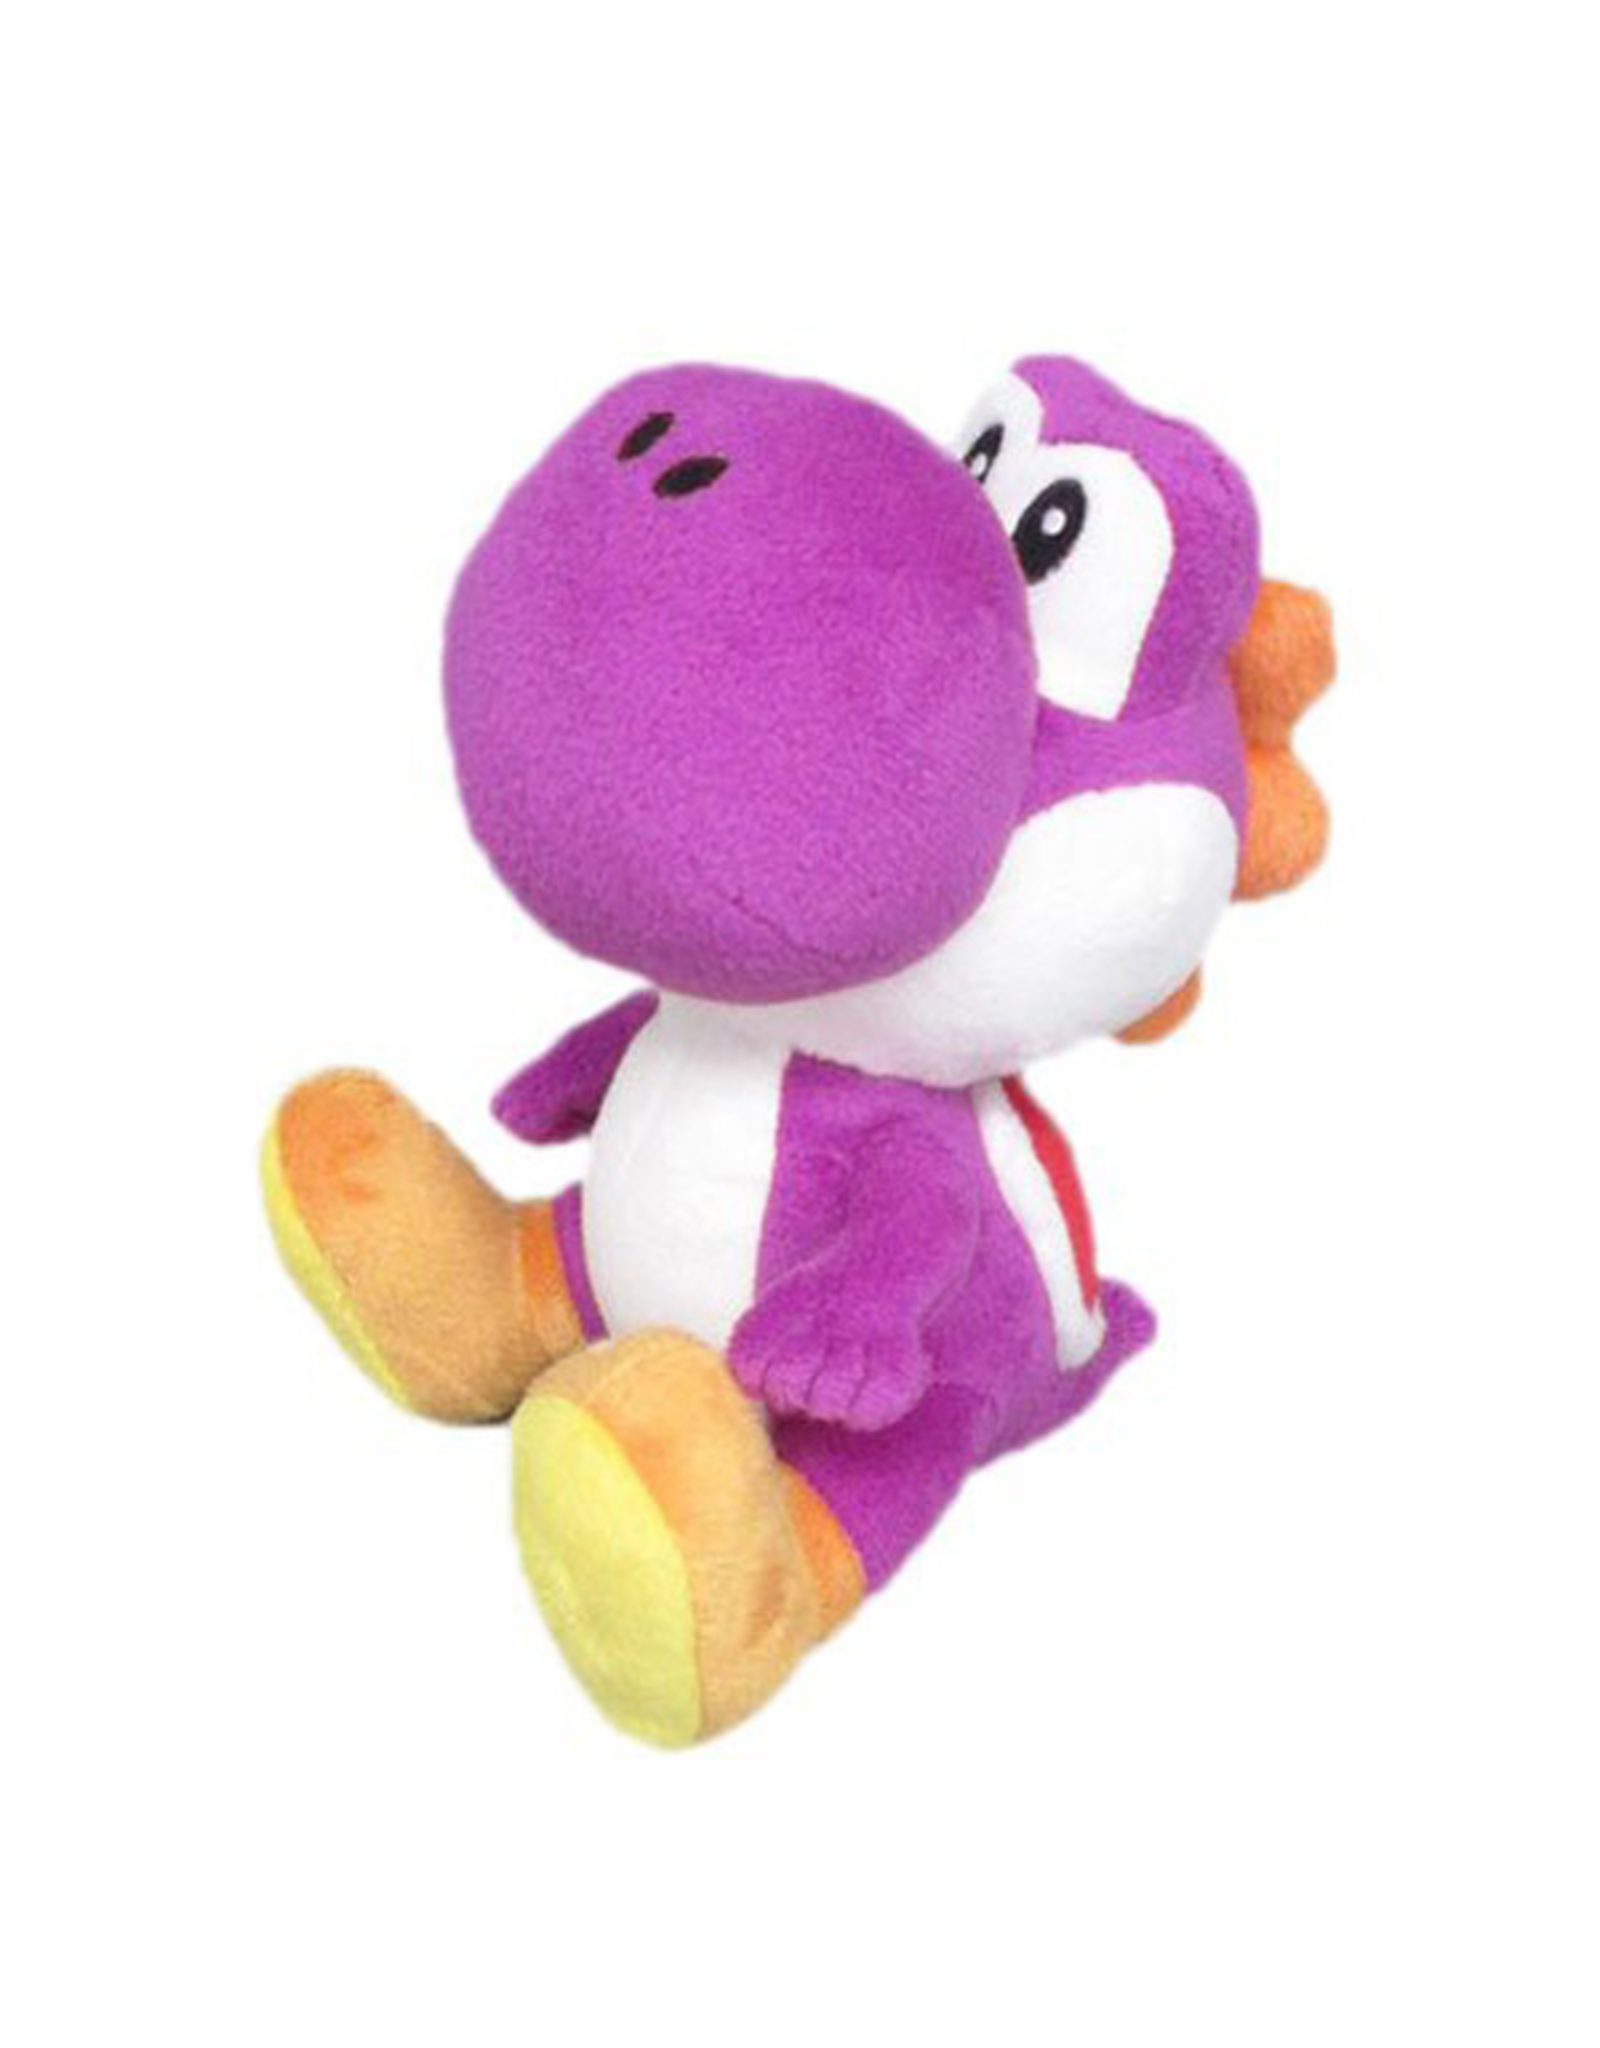 Little Buddy Super Mario Bros - Purple Yoshi 8" Plush